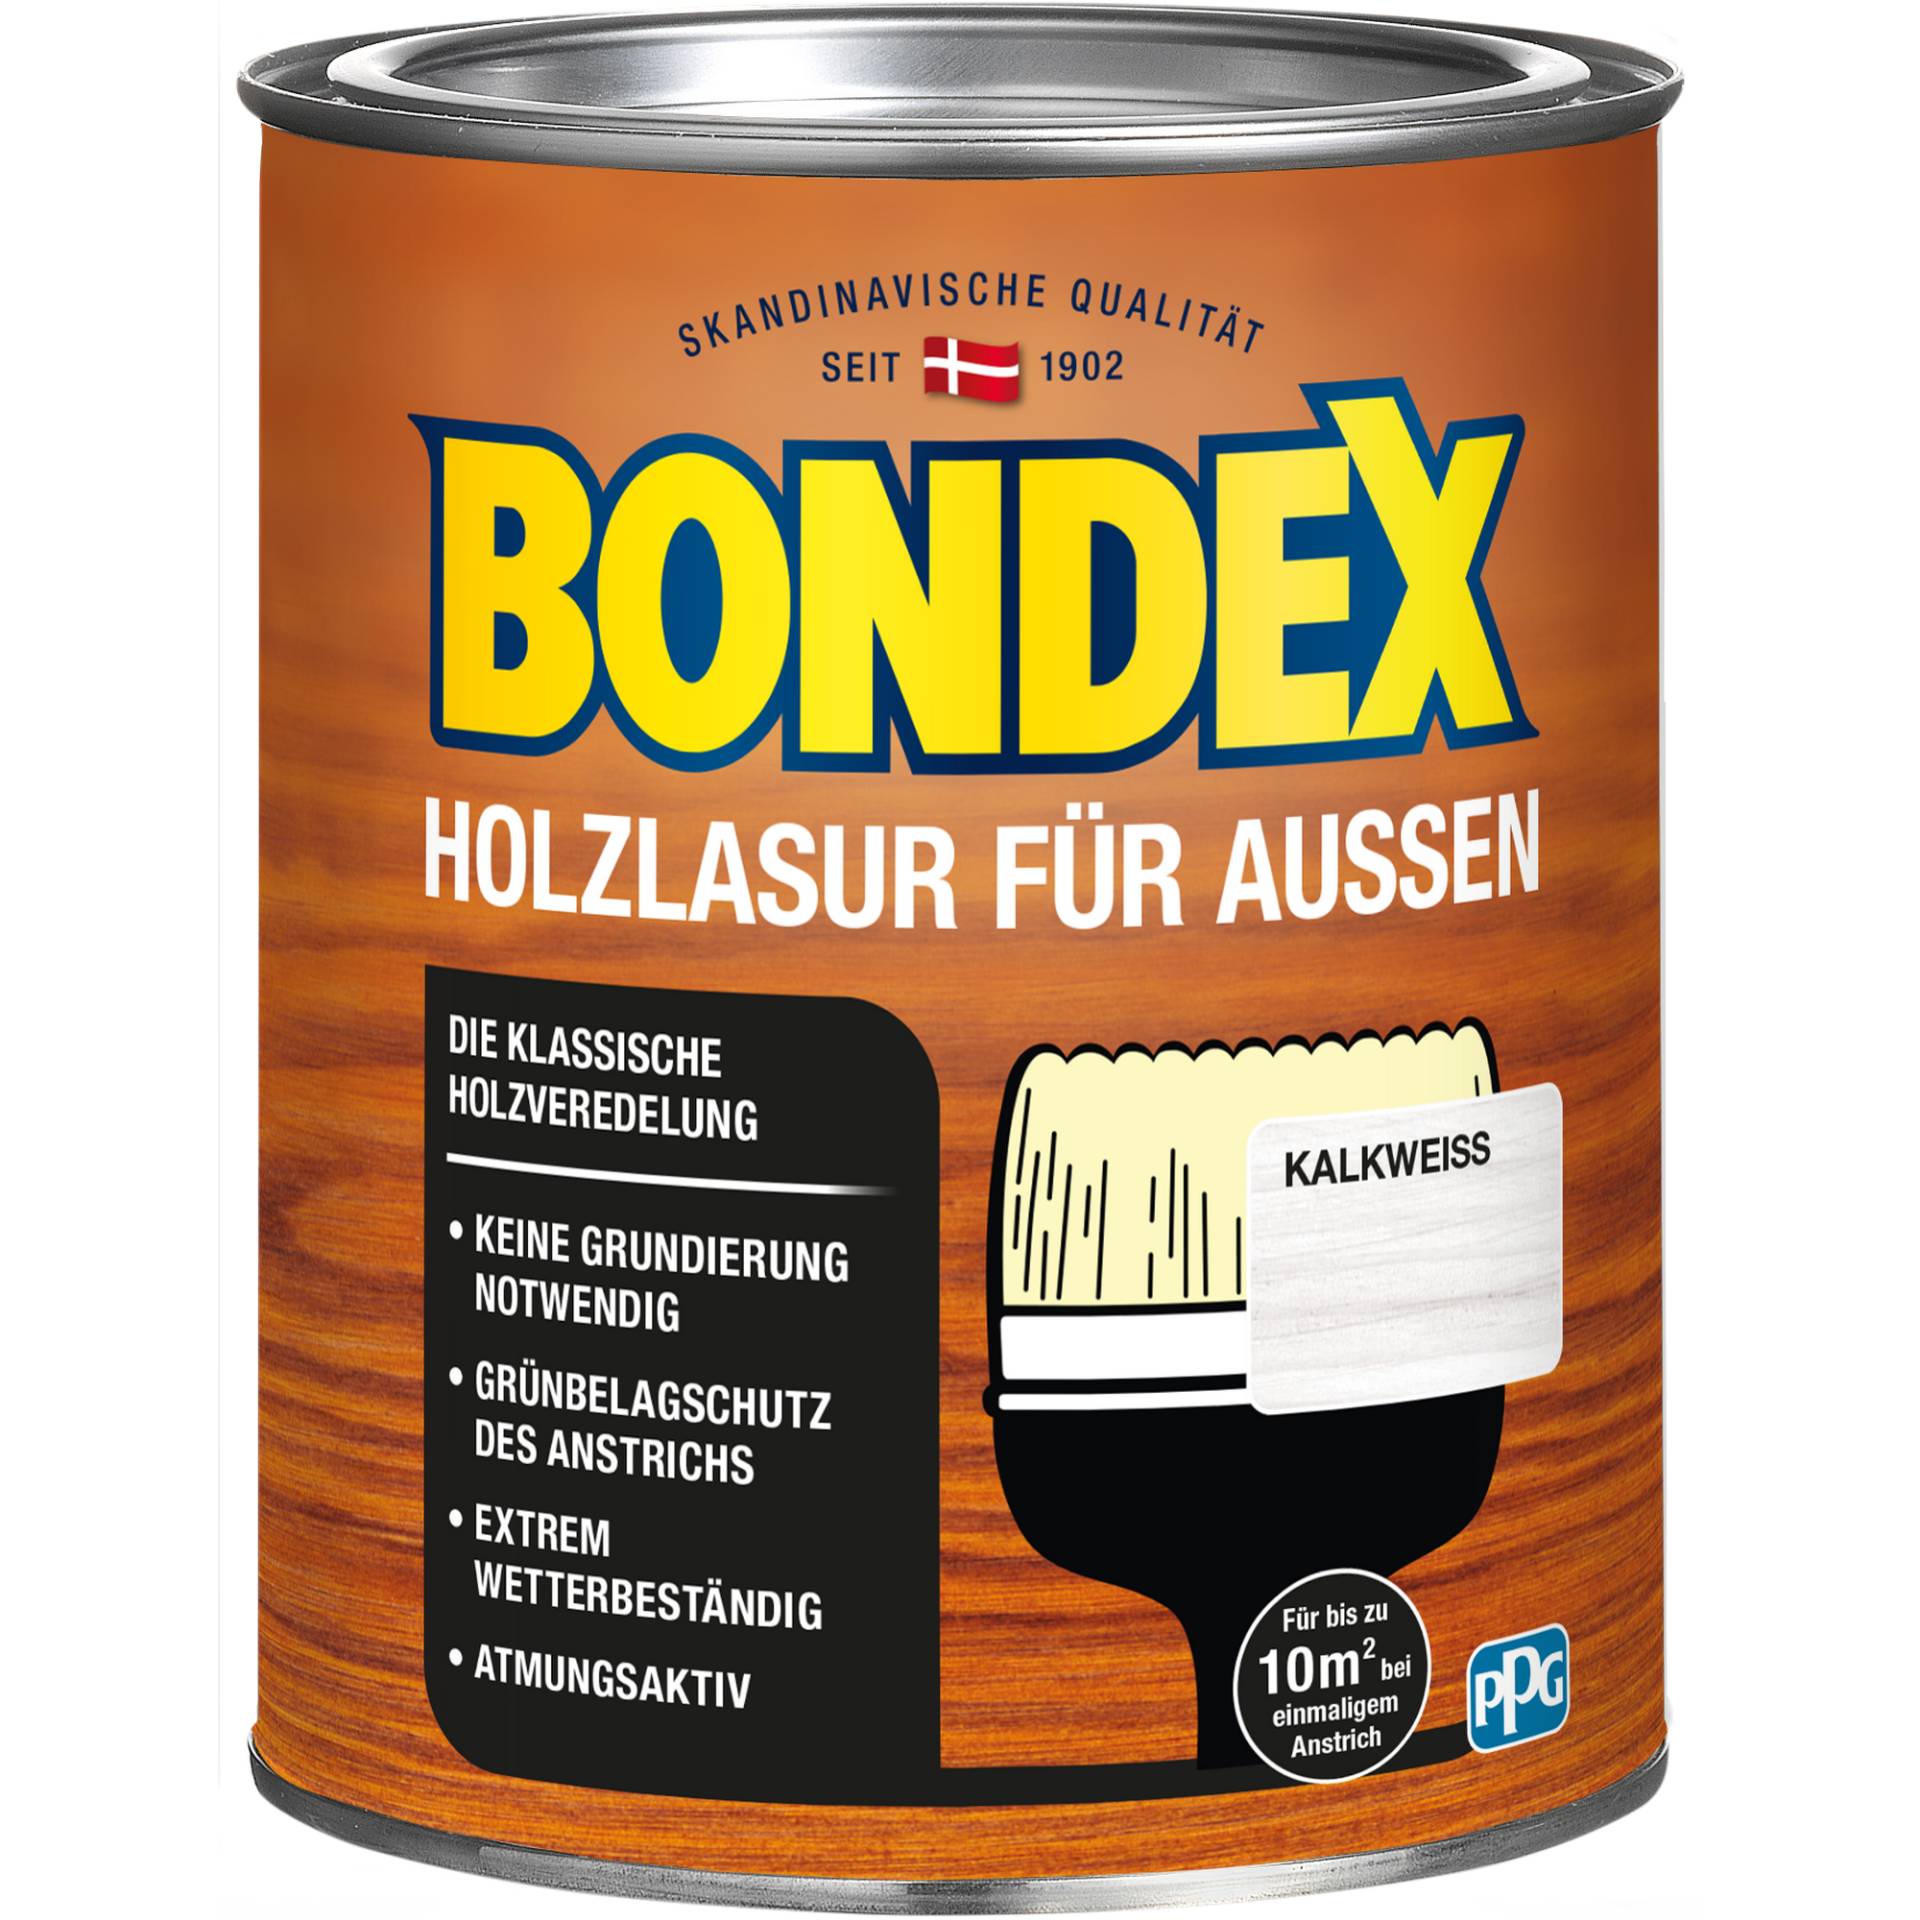 Bondex Holzlasur kalkweiß 750 ml von Bondex